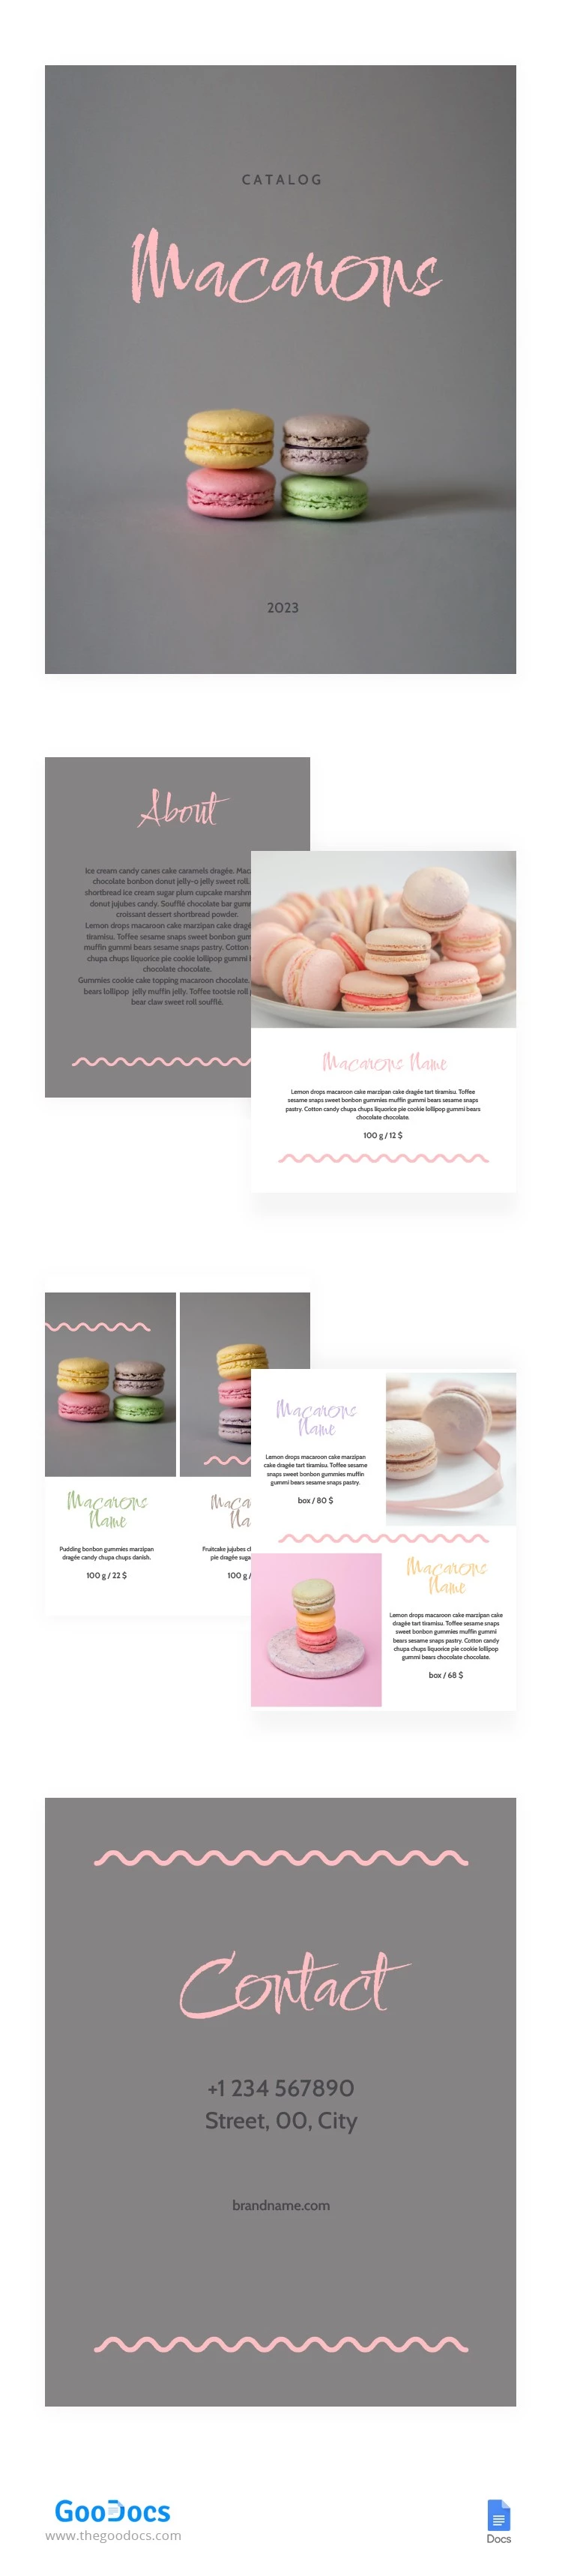 Cute Macarons Catalog - free Google Docs Template - 10064019